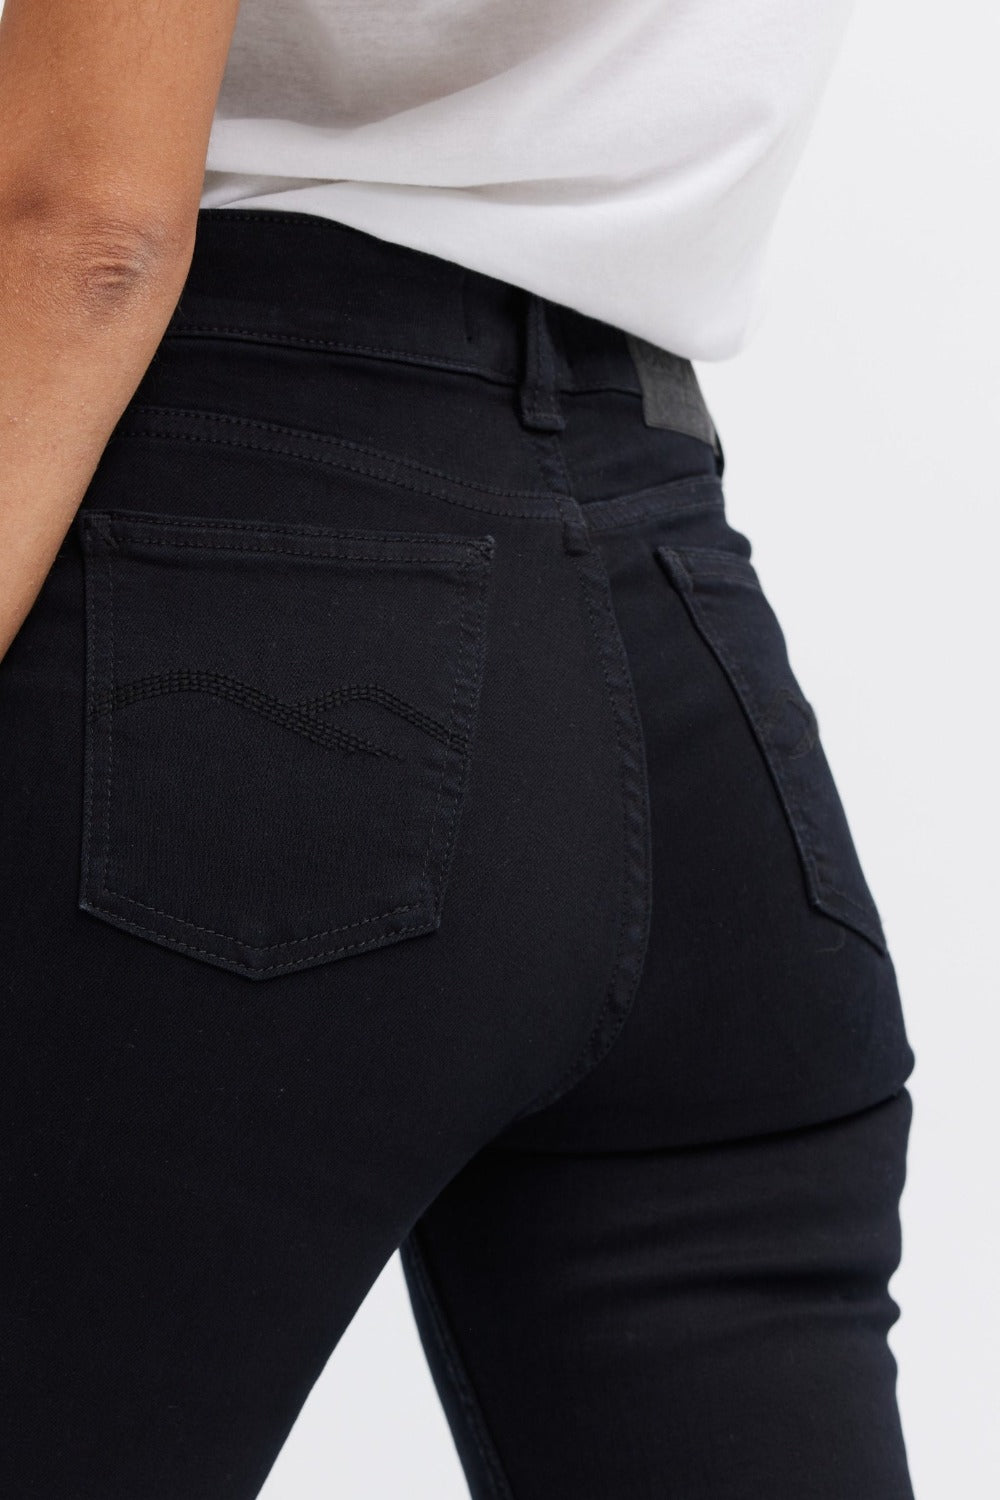 Women's black jeans - black organic denim by ORGANSK